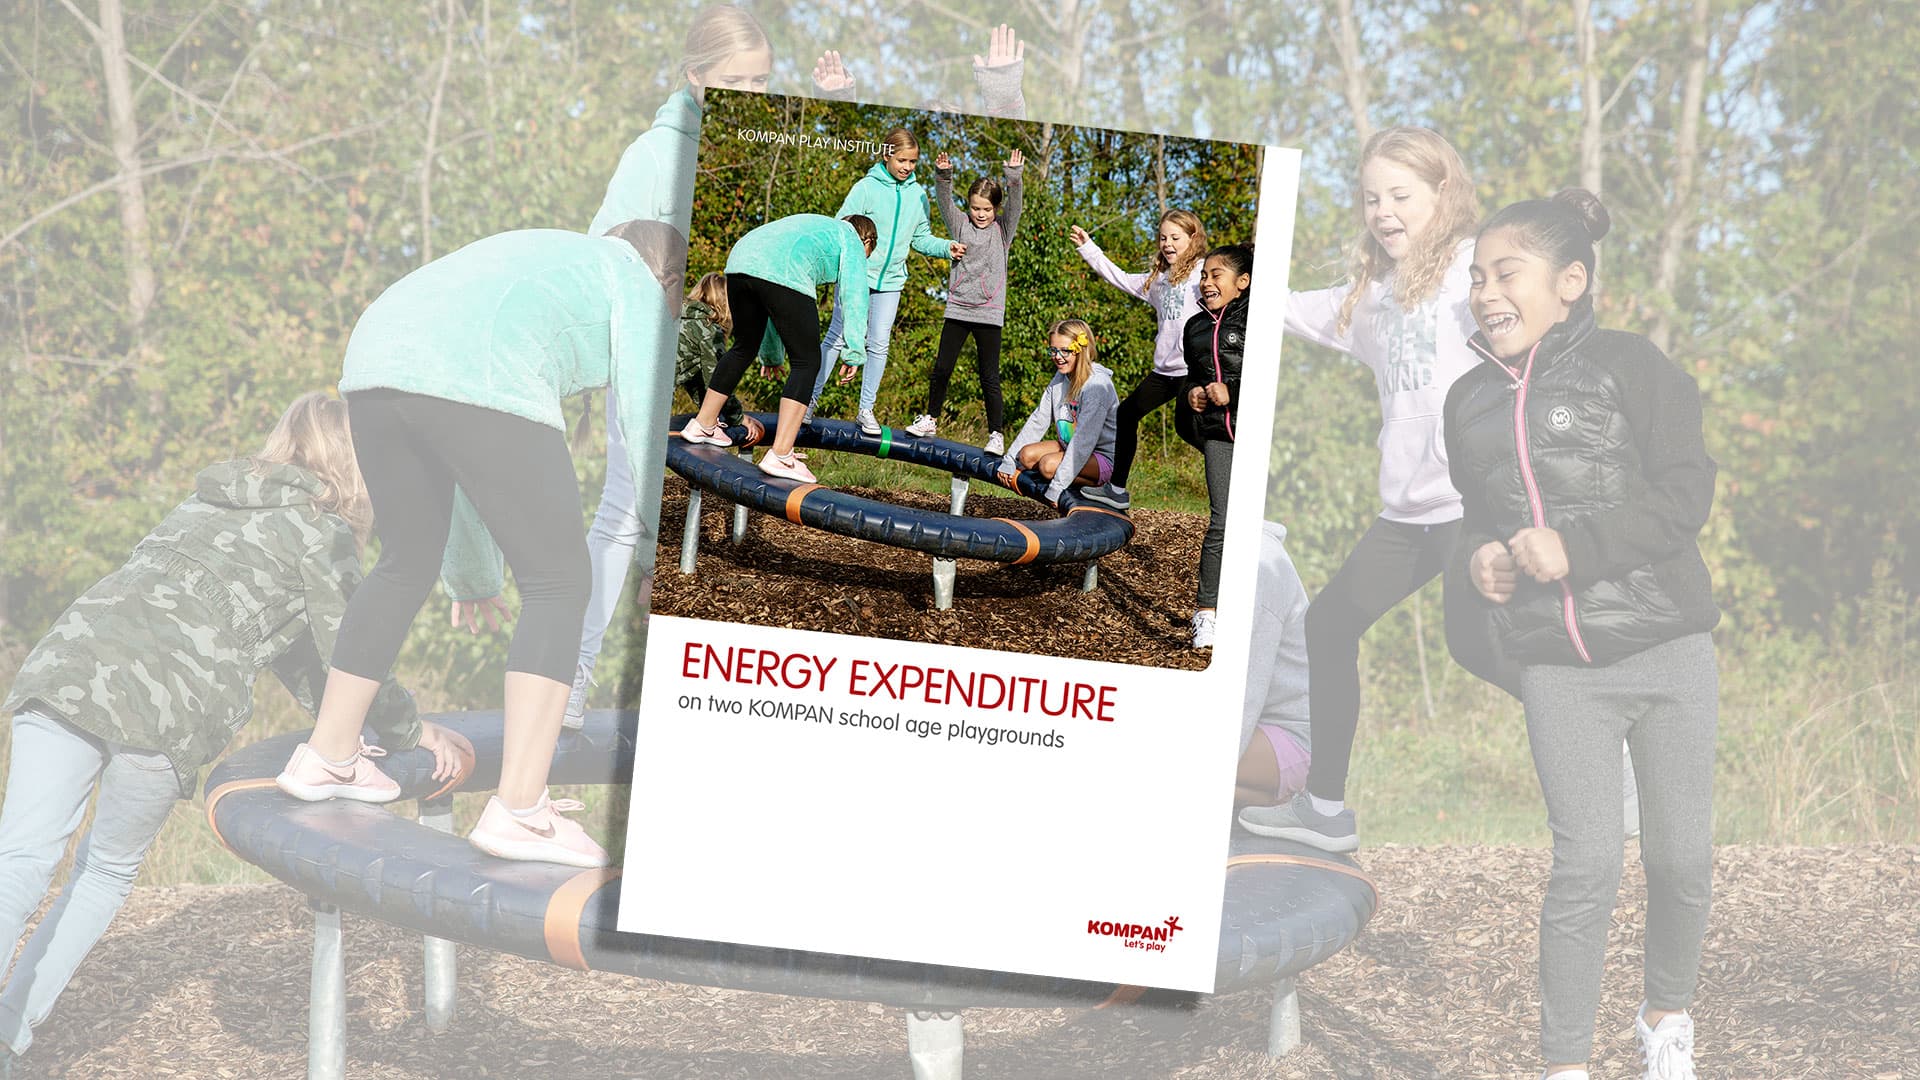 Energy expenditure on a KOMPAN school age playground